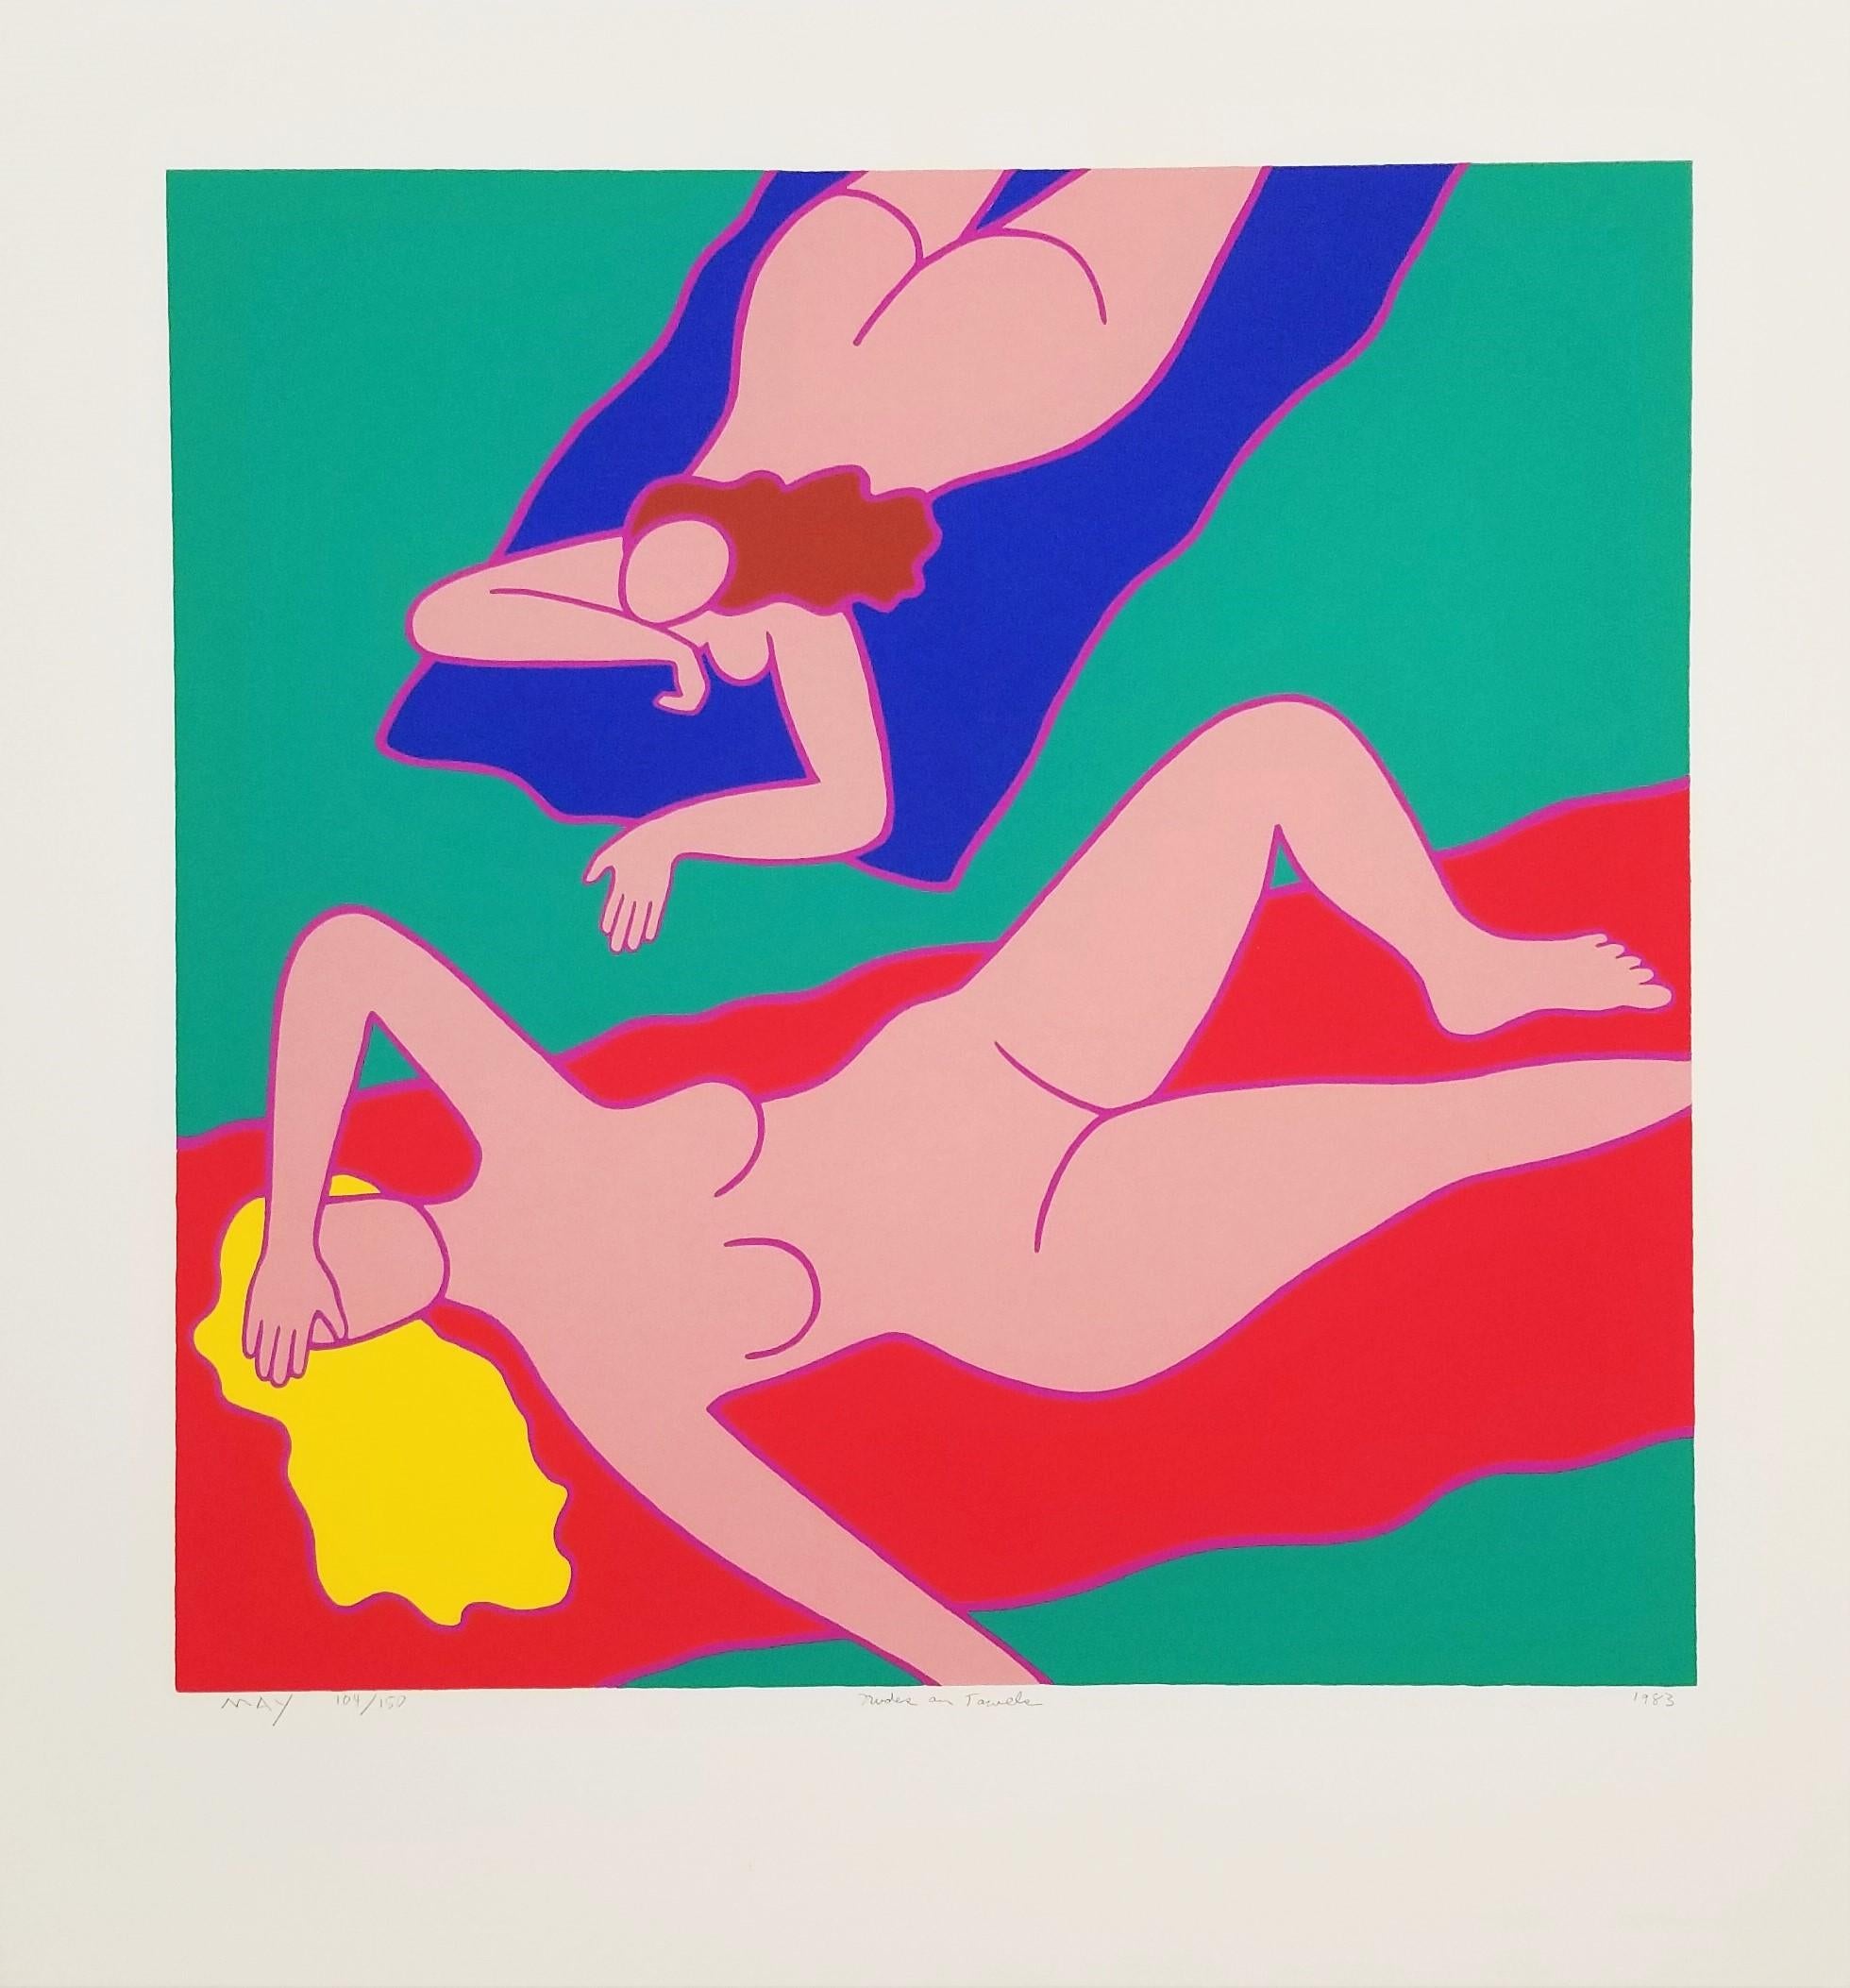 Nudes on Towels /// Contemporary Pop Art Figurative Swimming Pool Screenprint - Print by Dan May